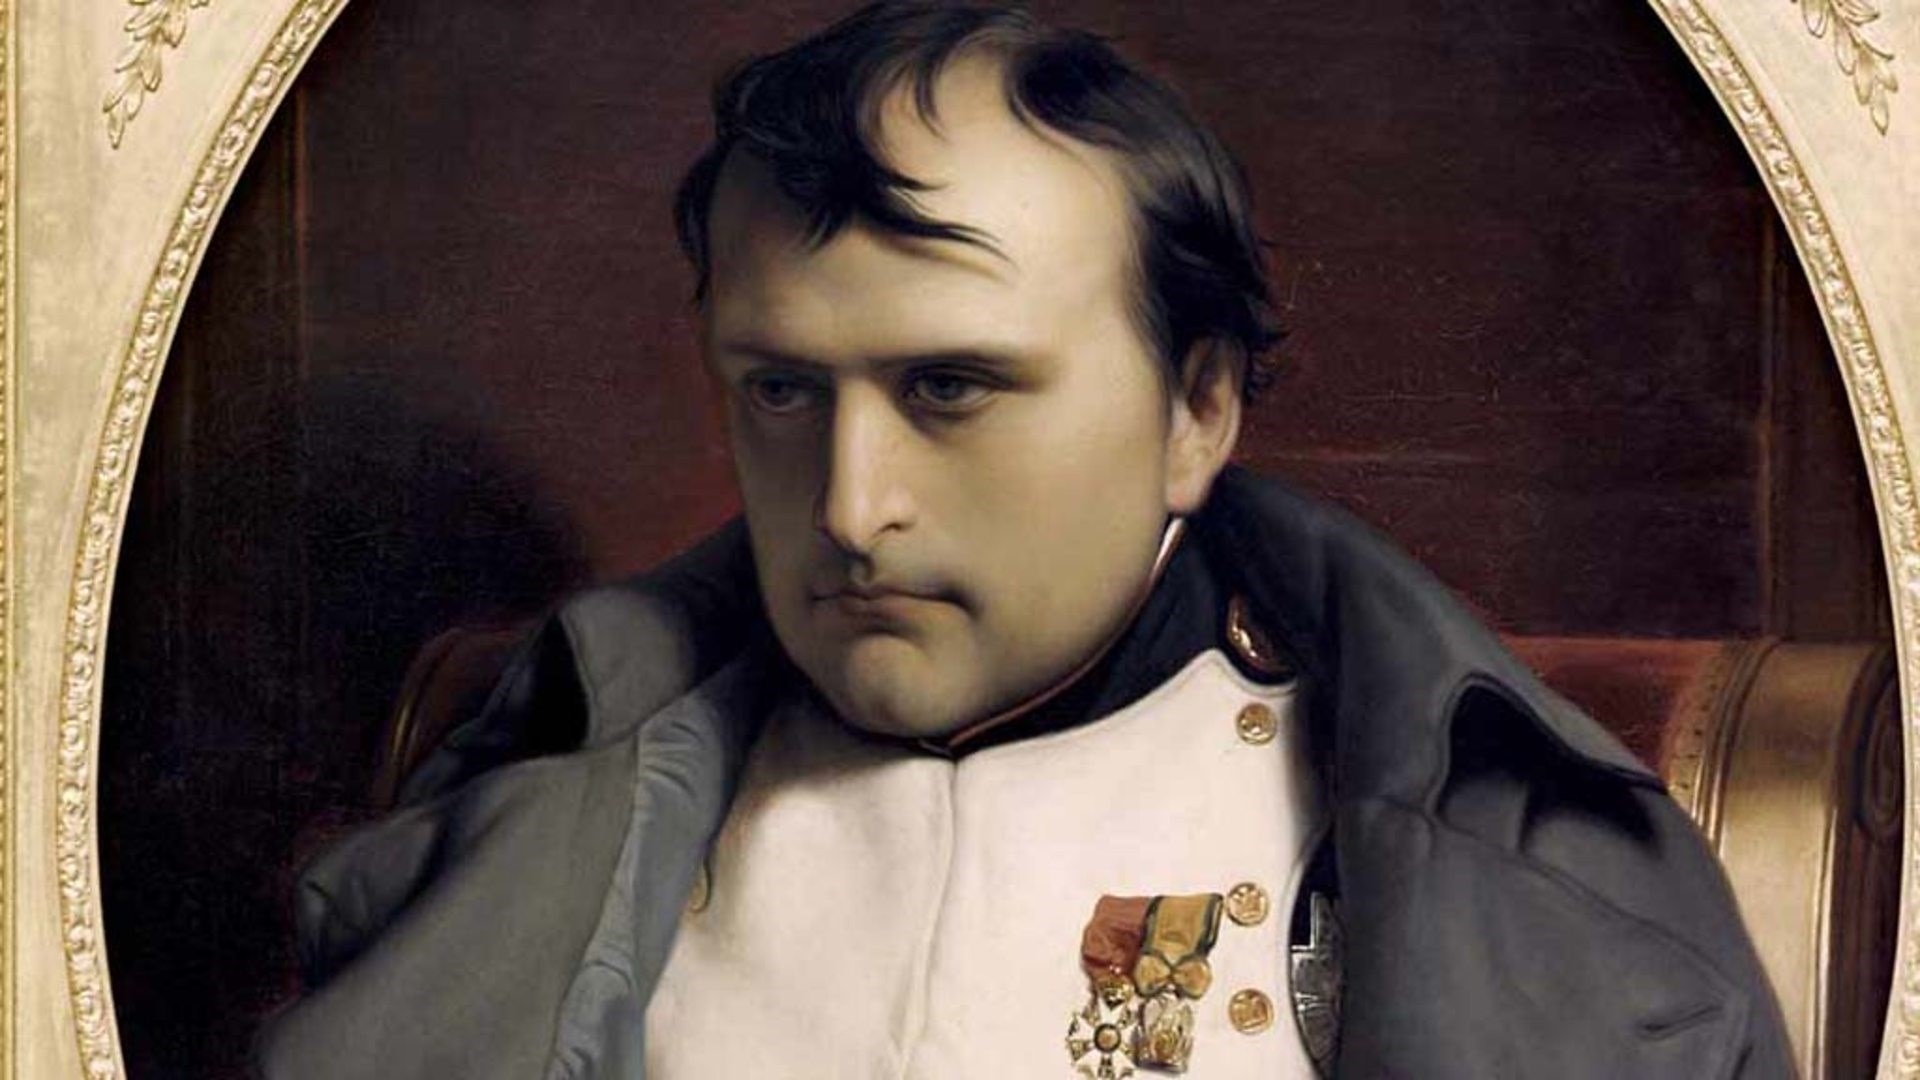 Портрет Наполеона Бонапарта